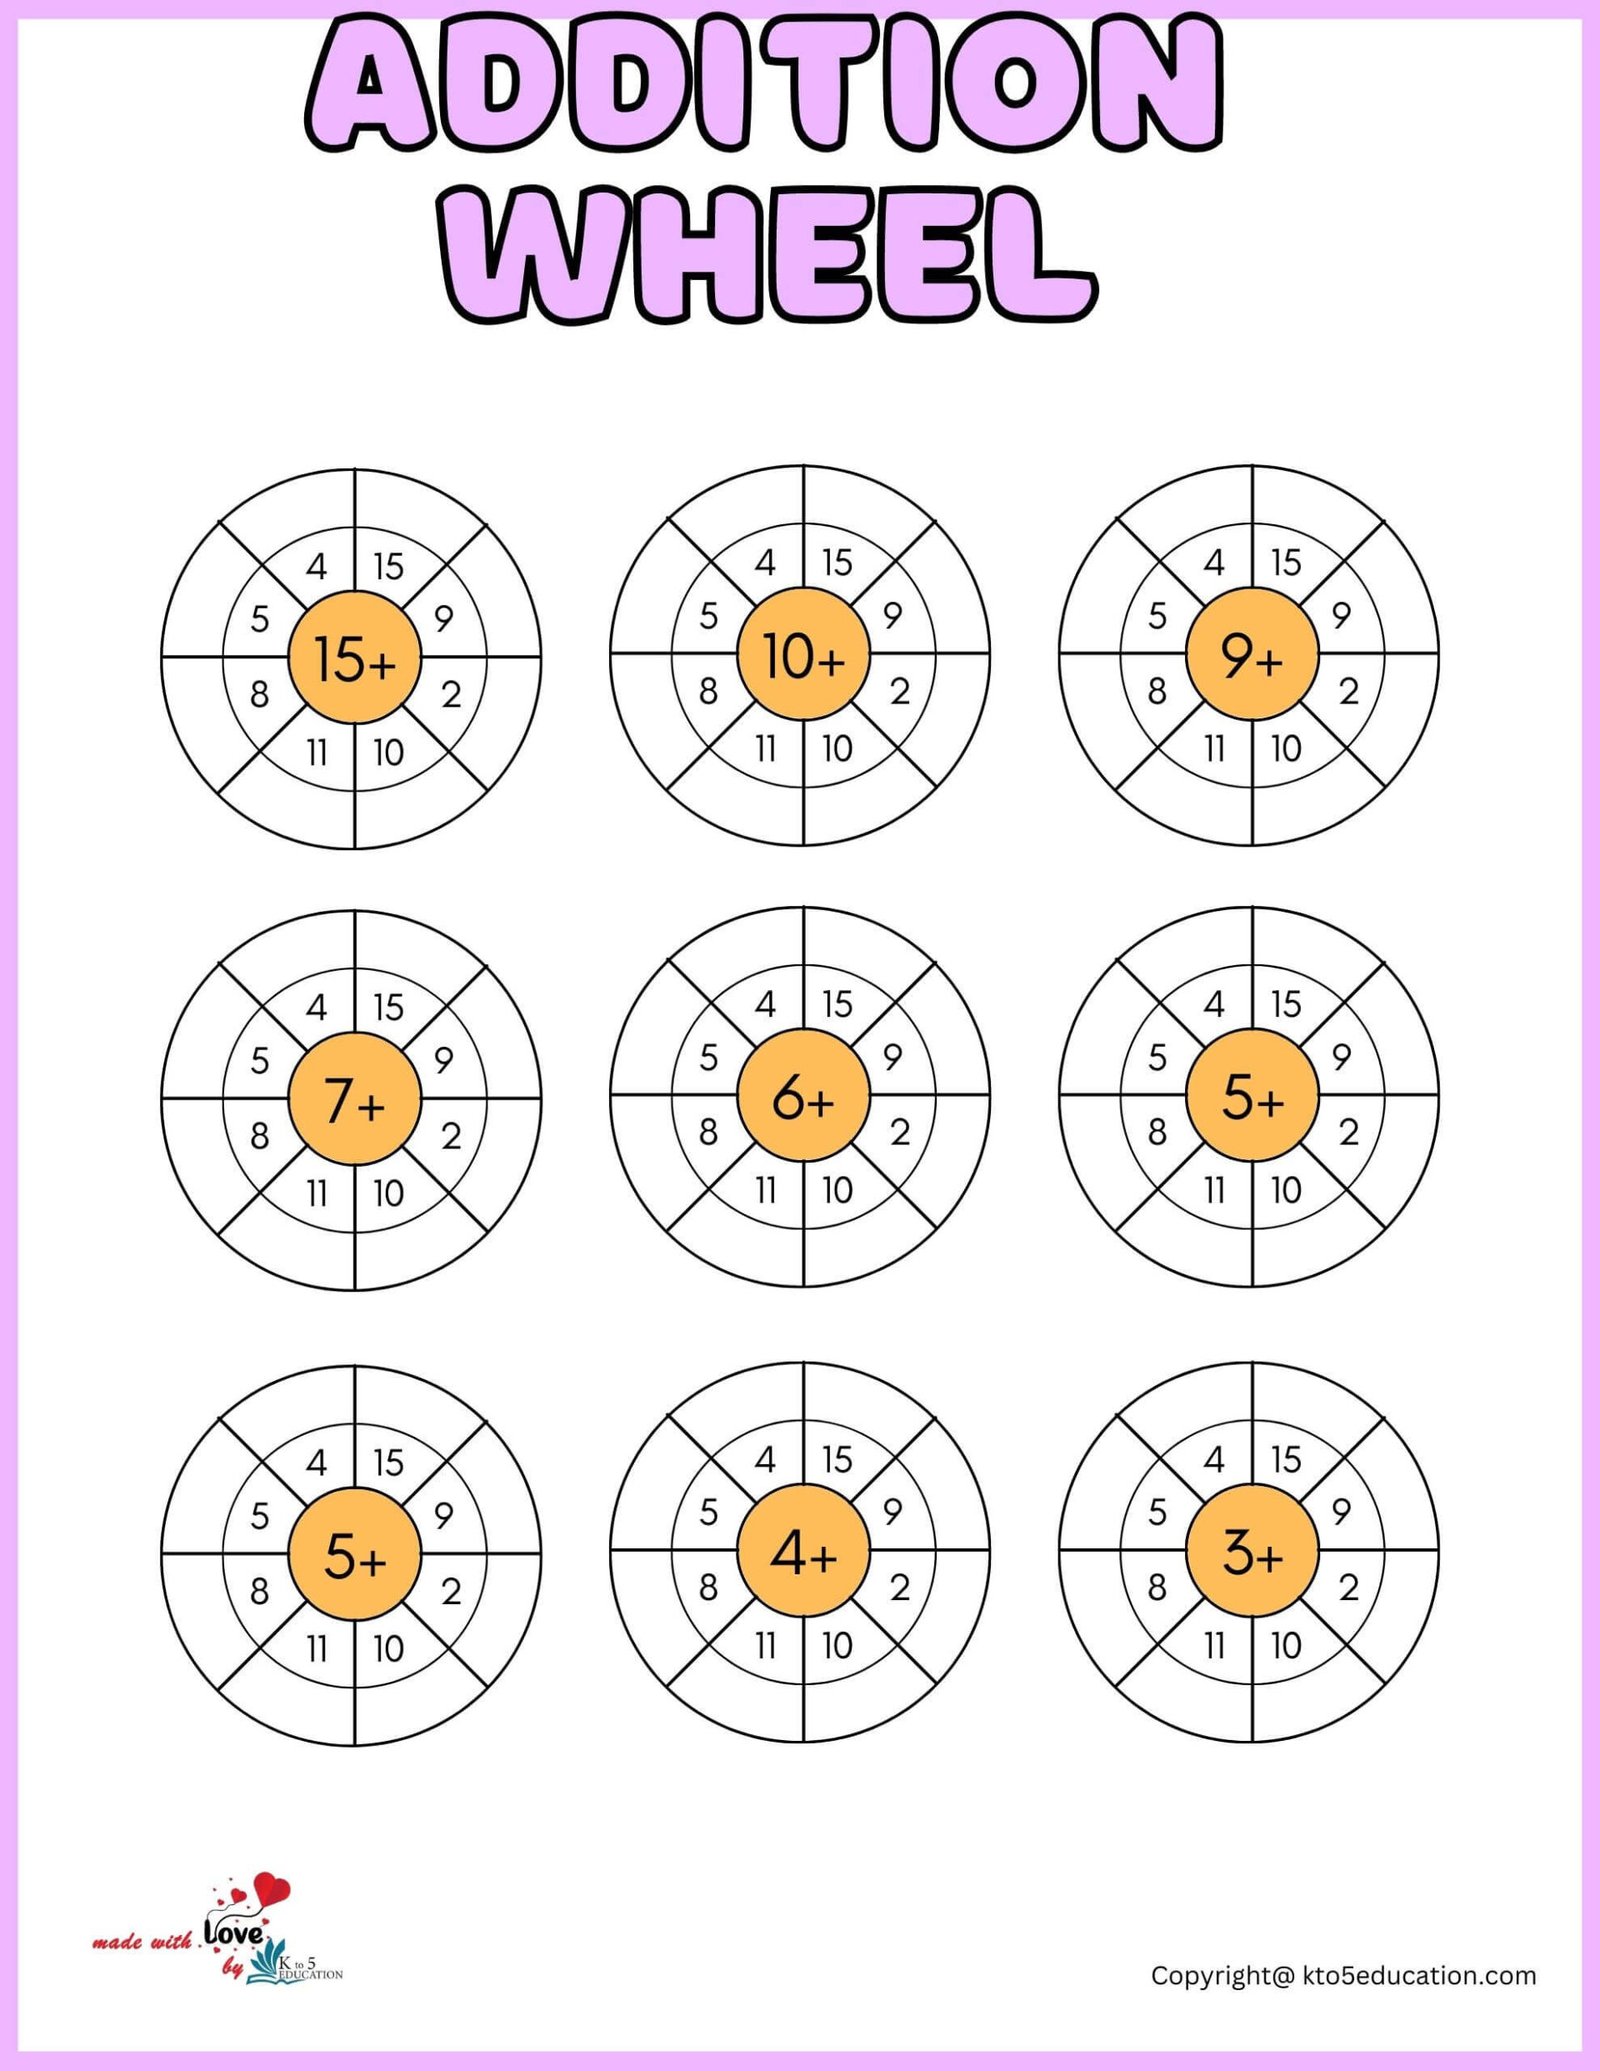 printable-addition-wheel-worksheet-for-kids-free